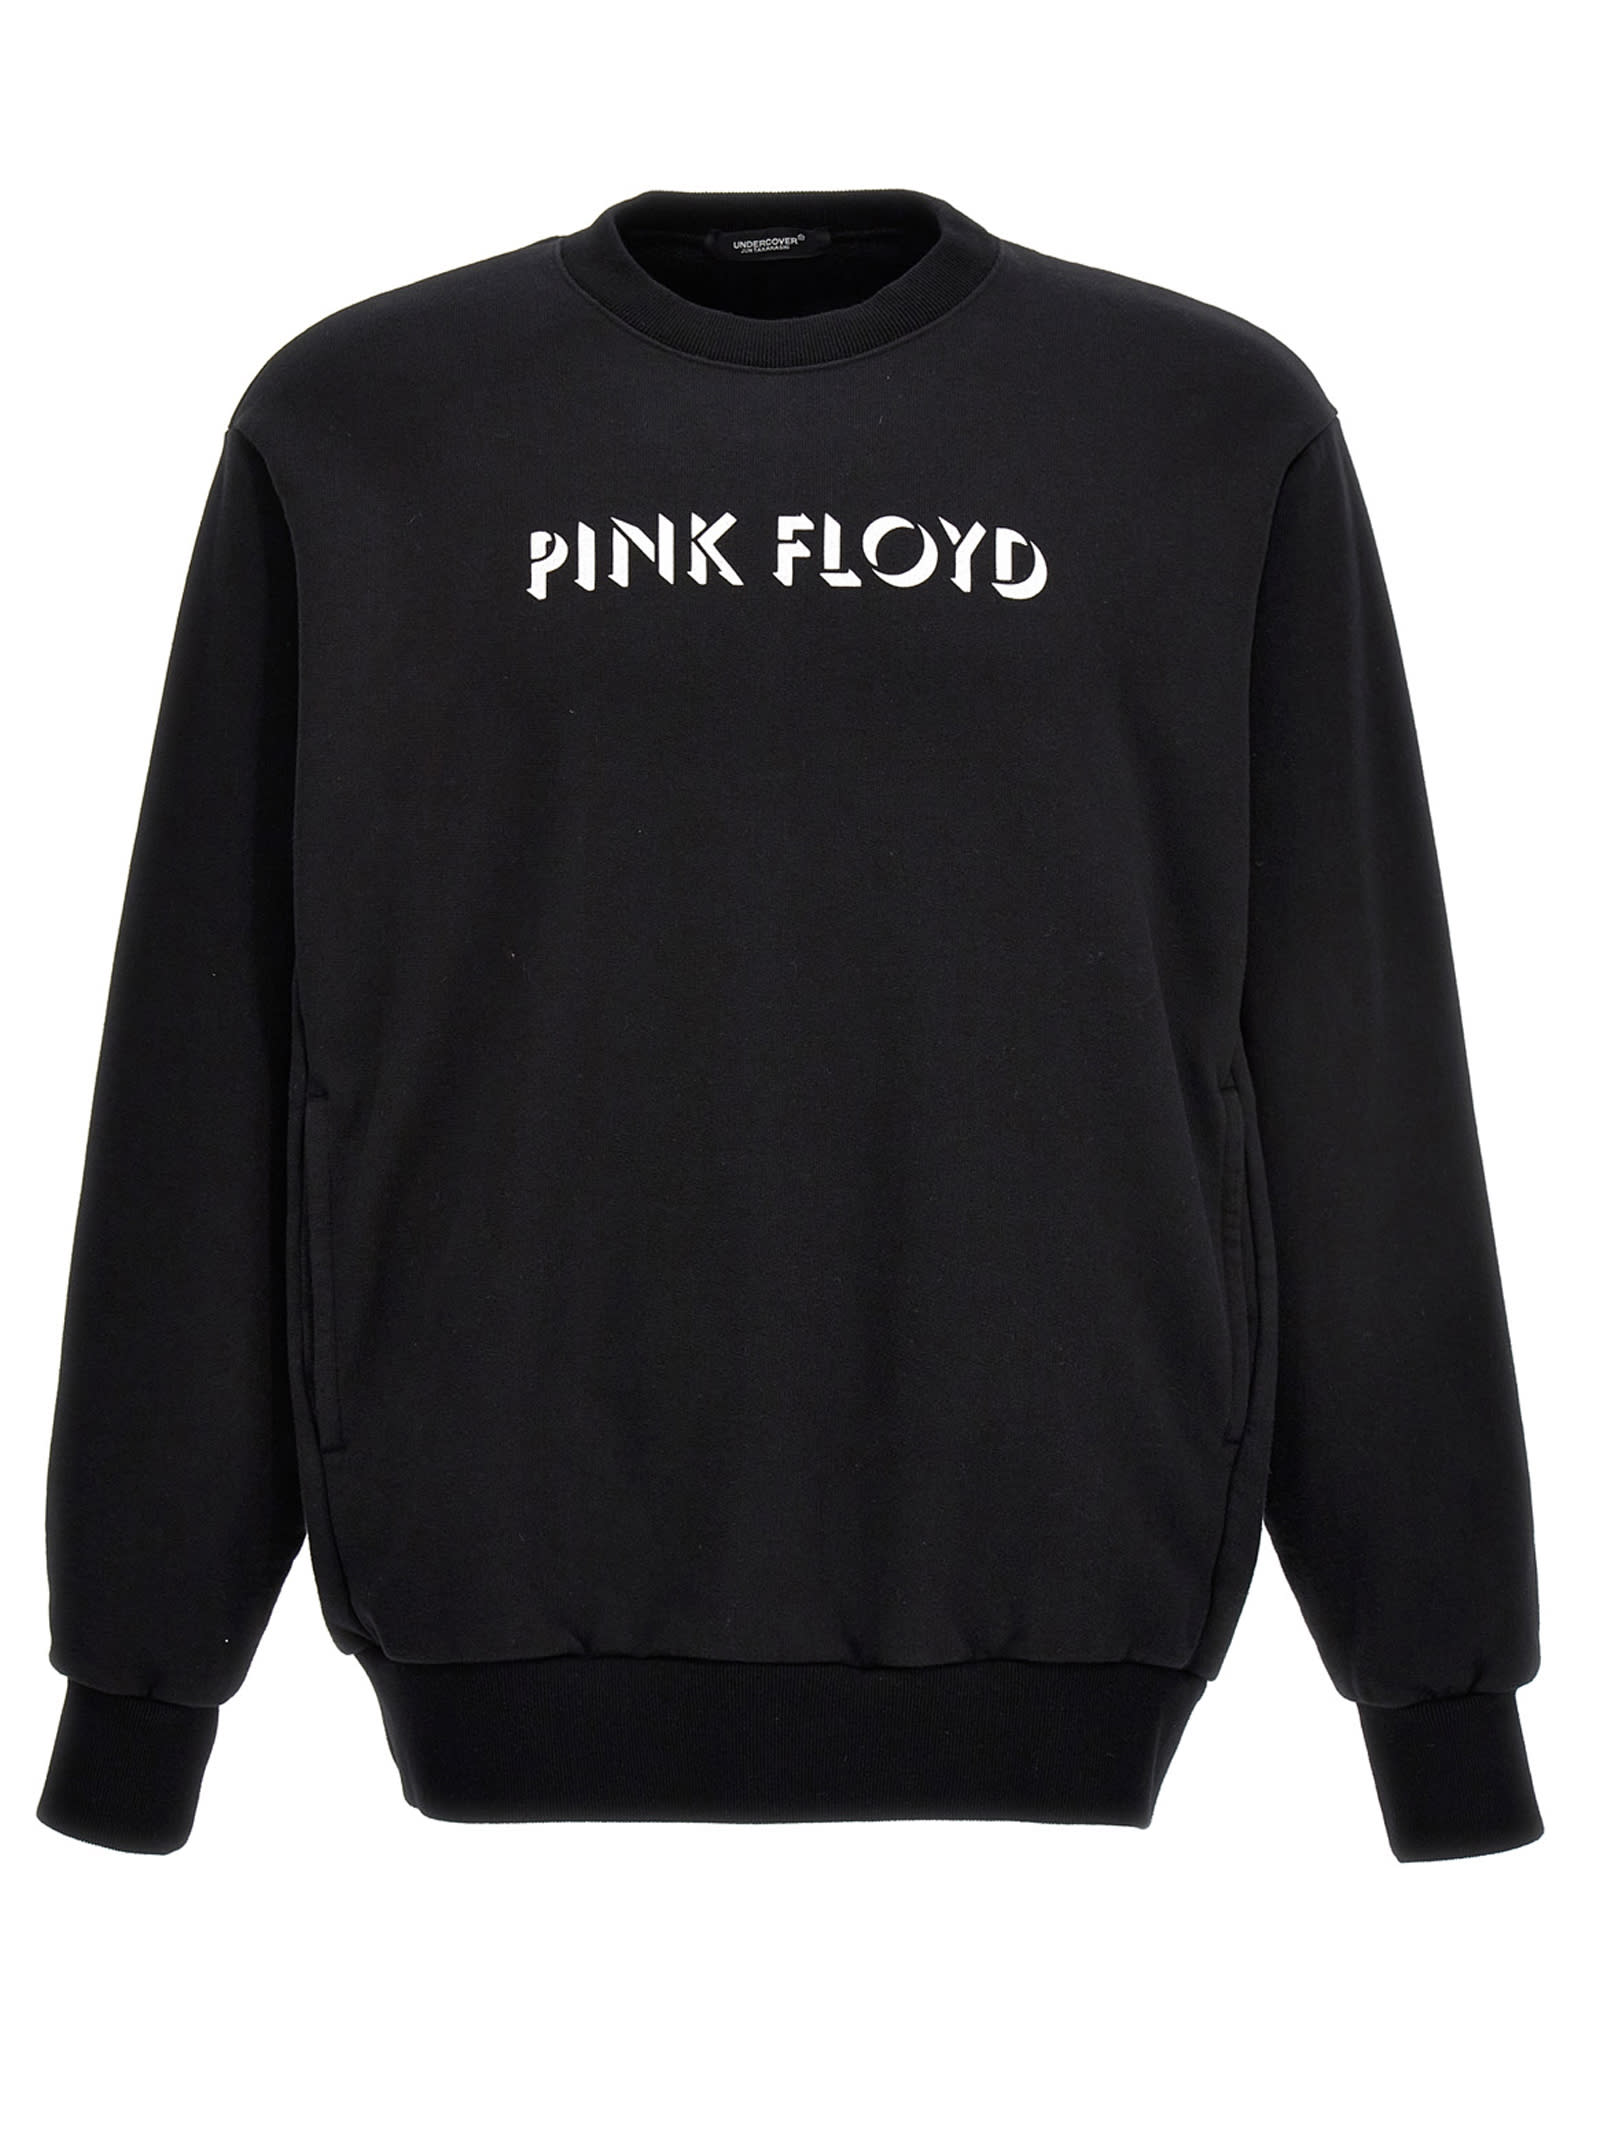 Undercover X Pink Floyd Sweatshirt